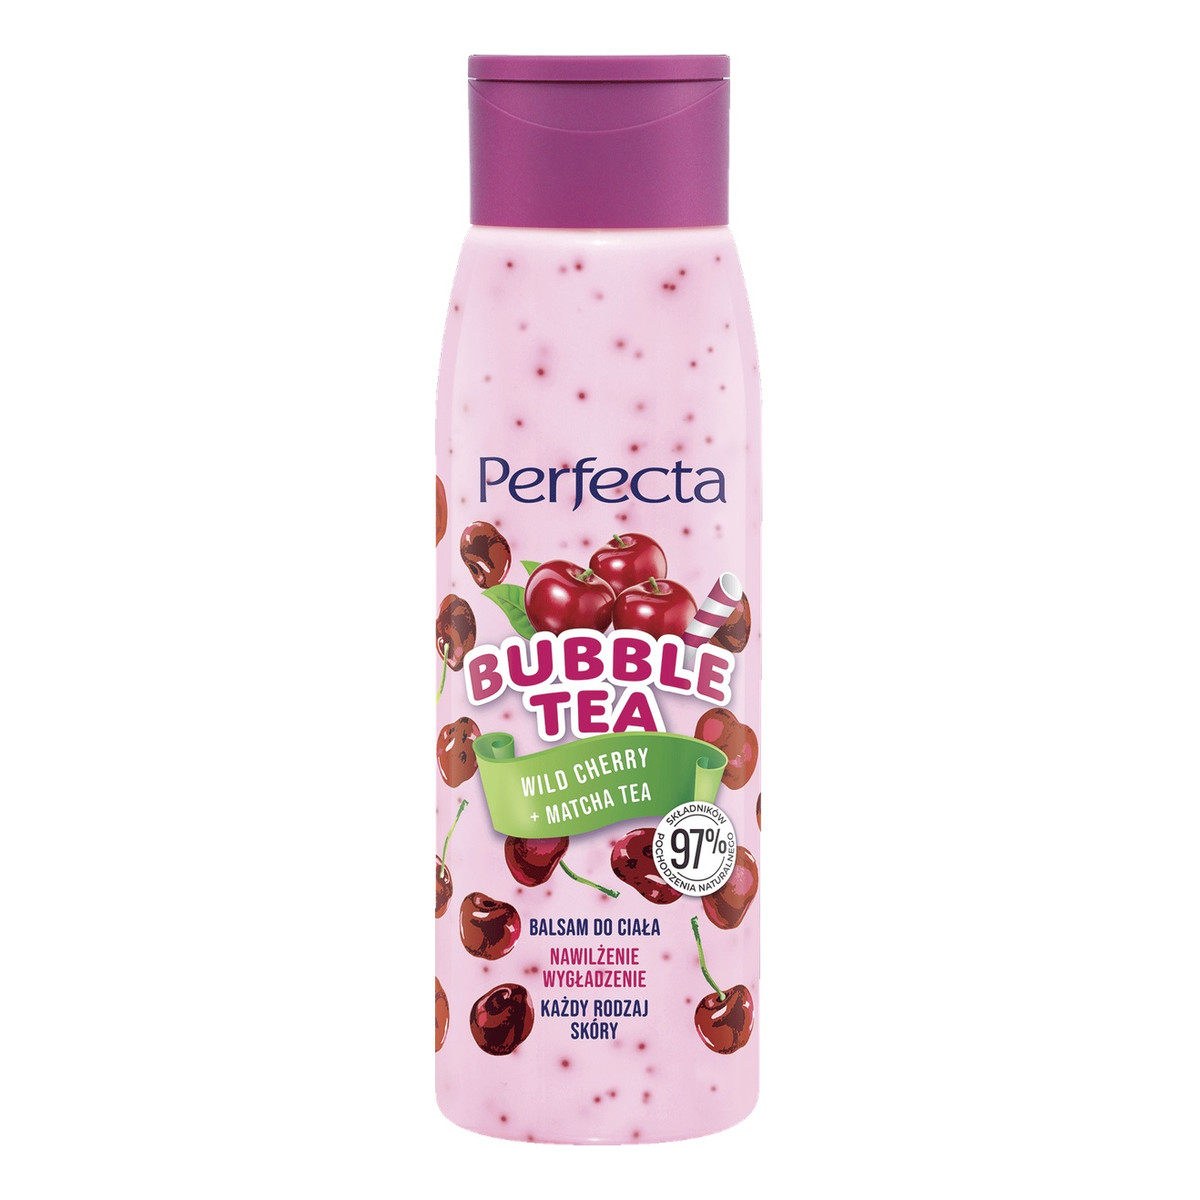 Perfecta Bubble Tea Tea Balsam do ciała wild cherry + matcha